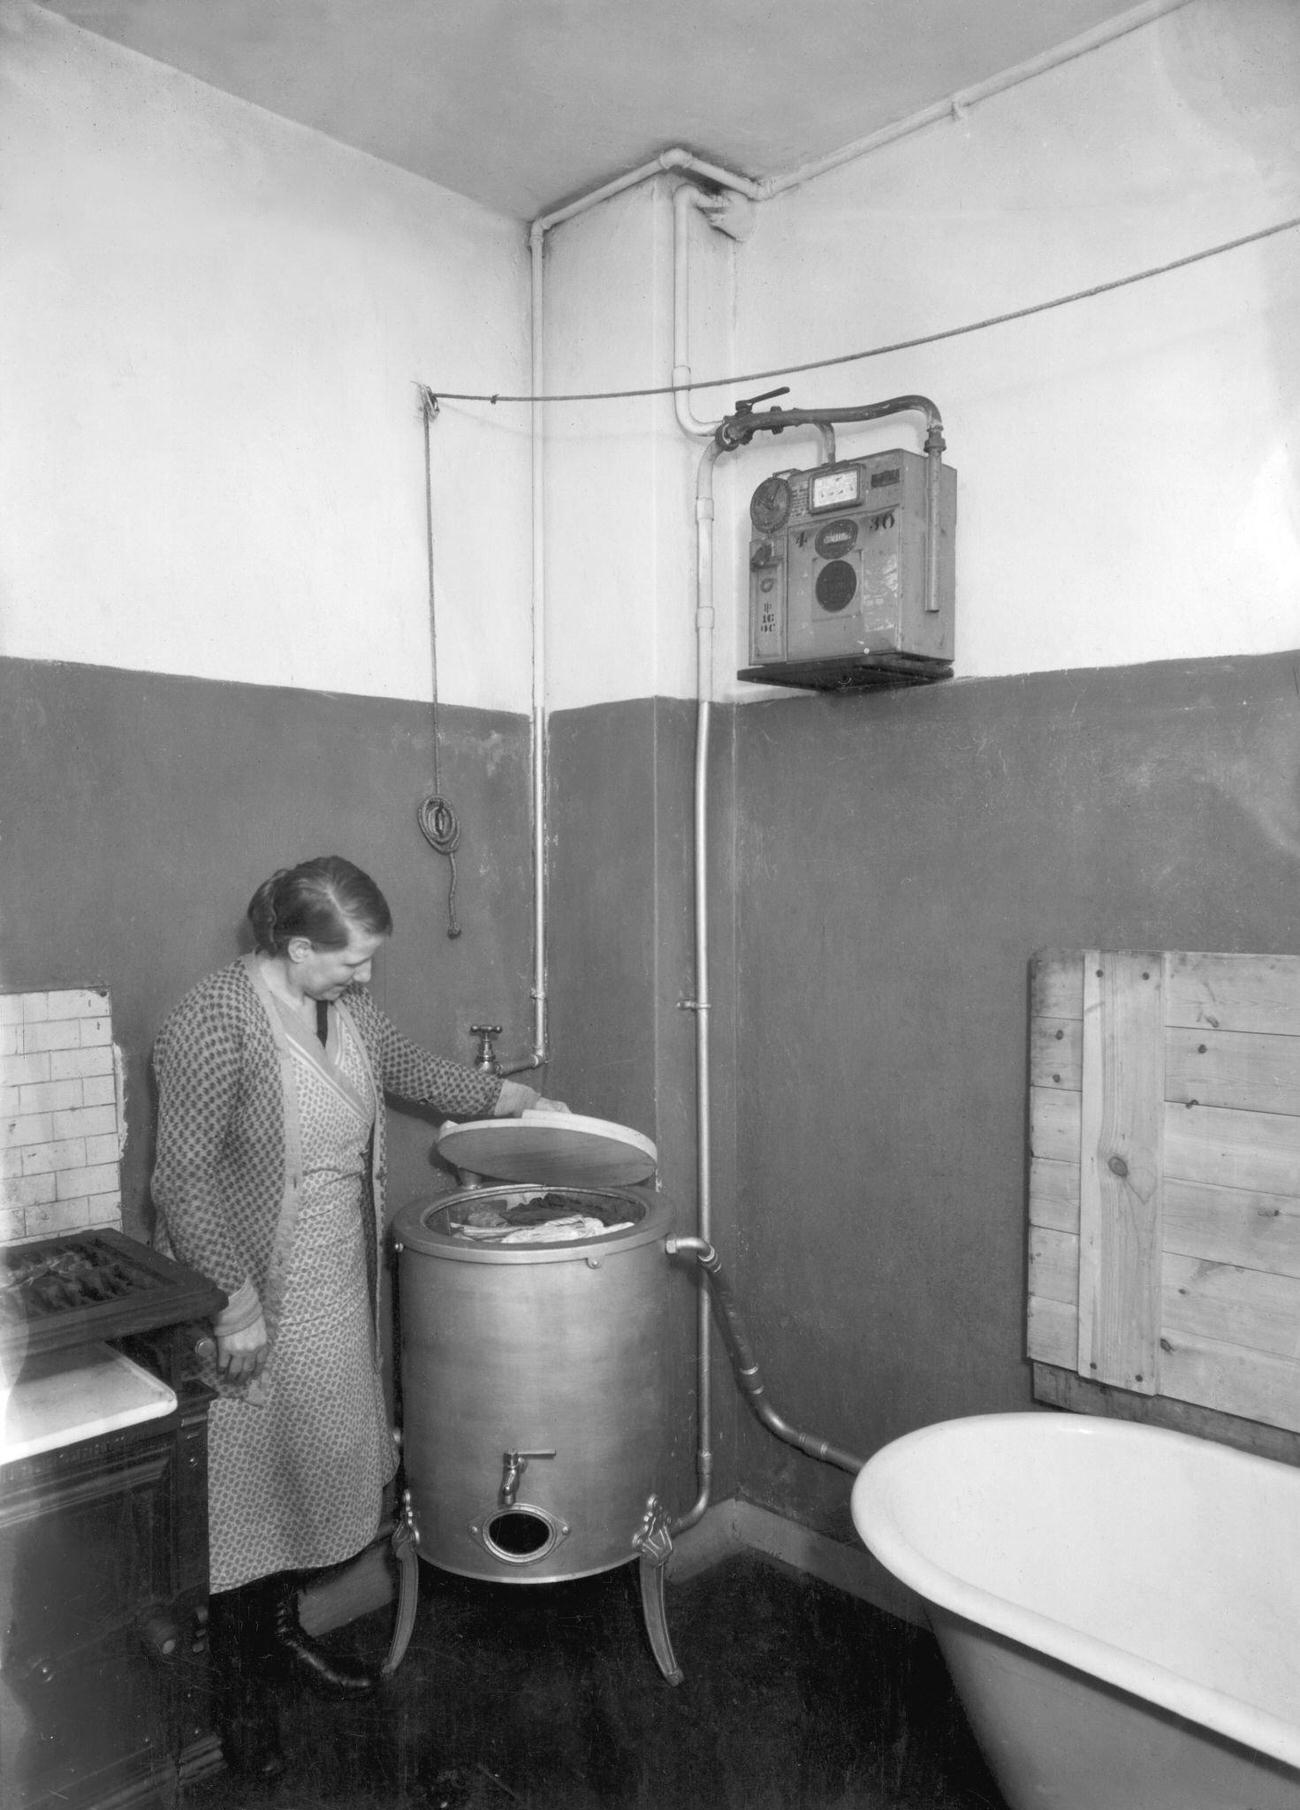 Elderly woman lifting lid of washing machine, UK, 1935.